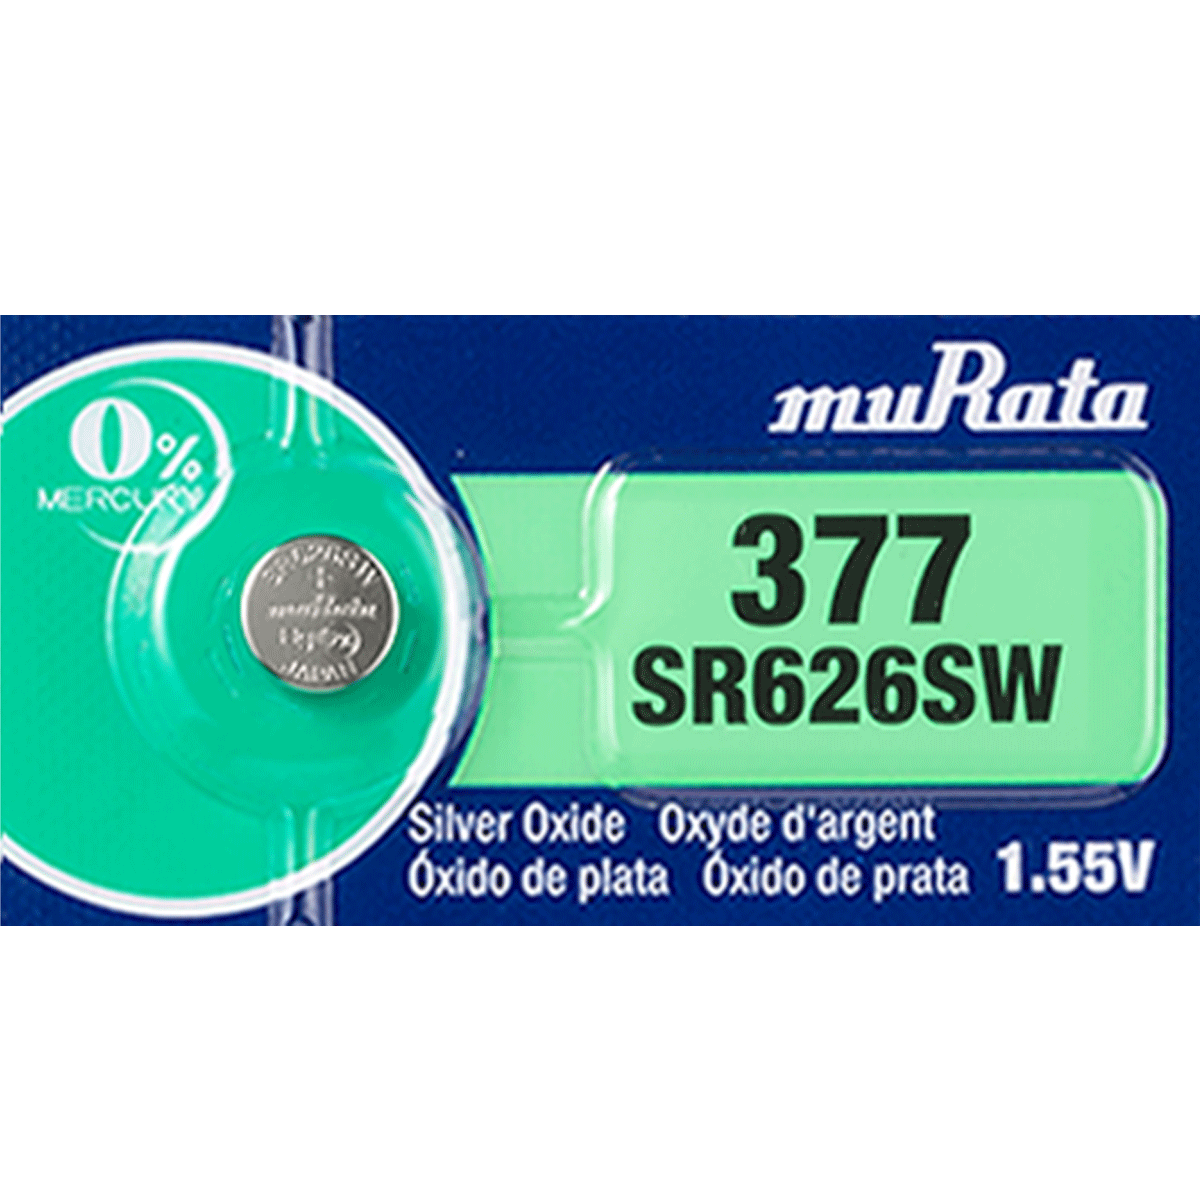 dommer Indføre Nat sted Murata 377 Battery (SR626SW) (formerly SONY) 1.55V Silver Oxide (1 Pack)